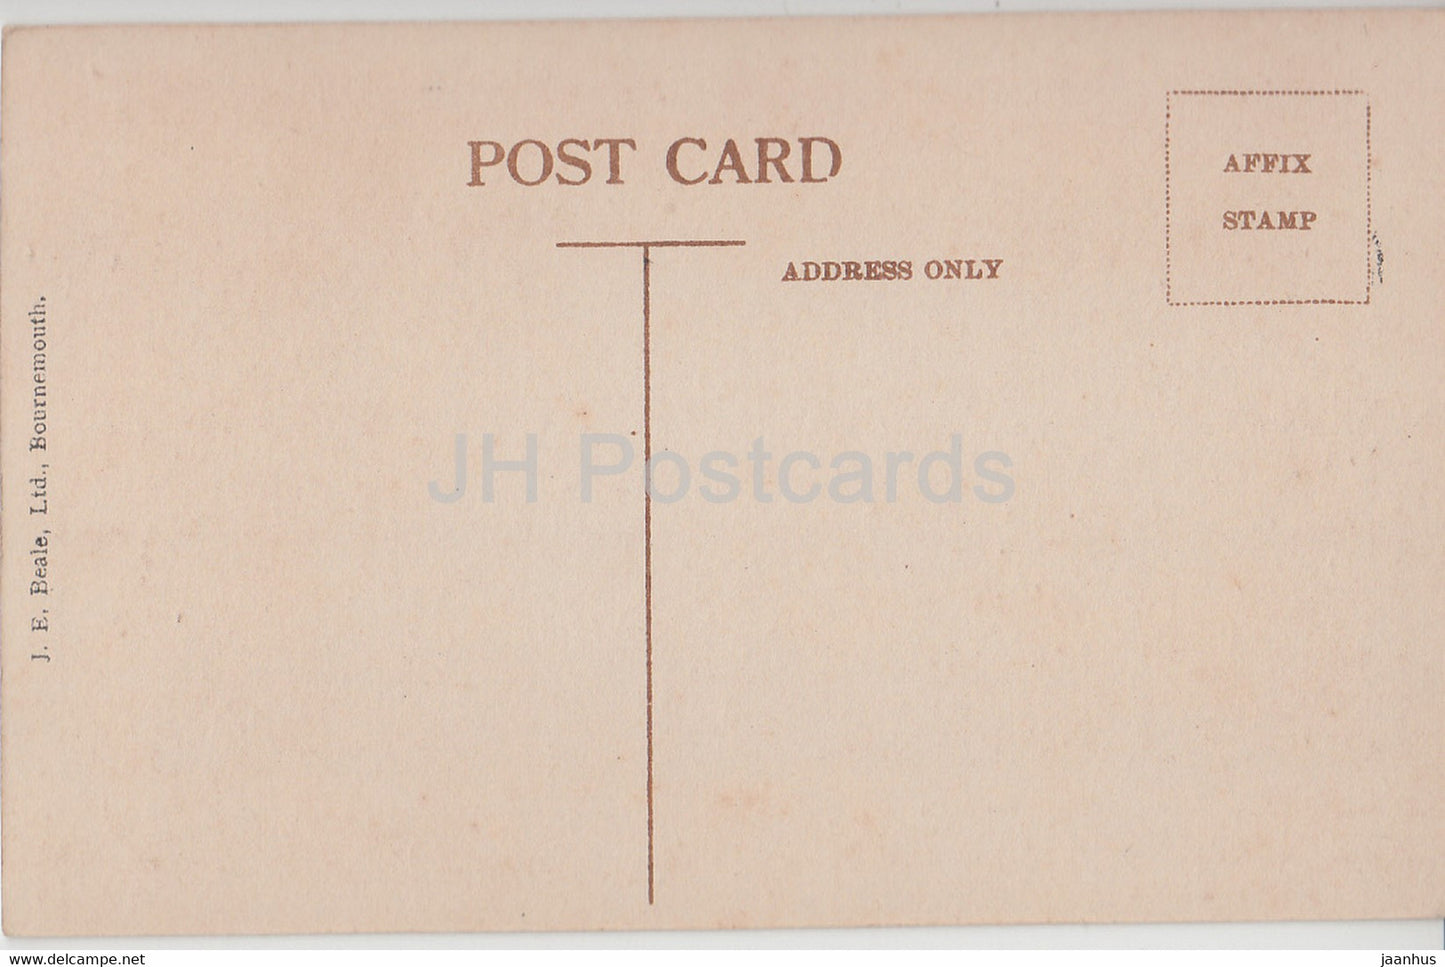 The Pine Walk - Bournemouth - 3677 - carte postale ancienne - Angleterre - Royaume-Uni - inutilisé